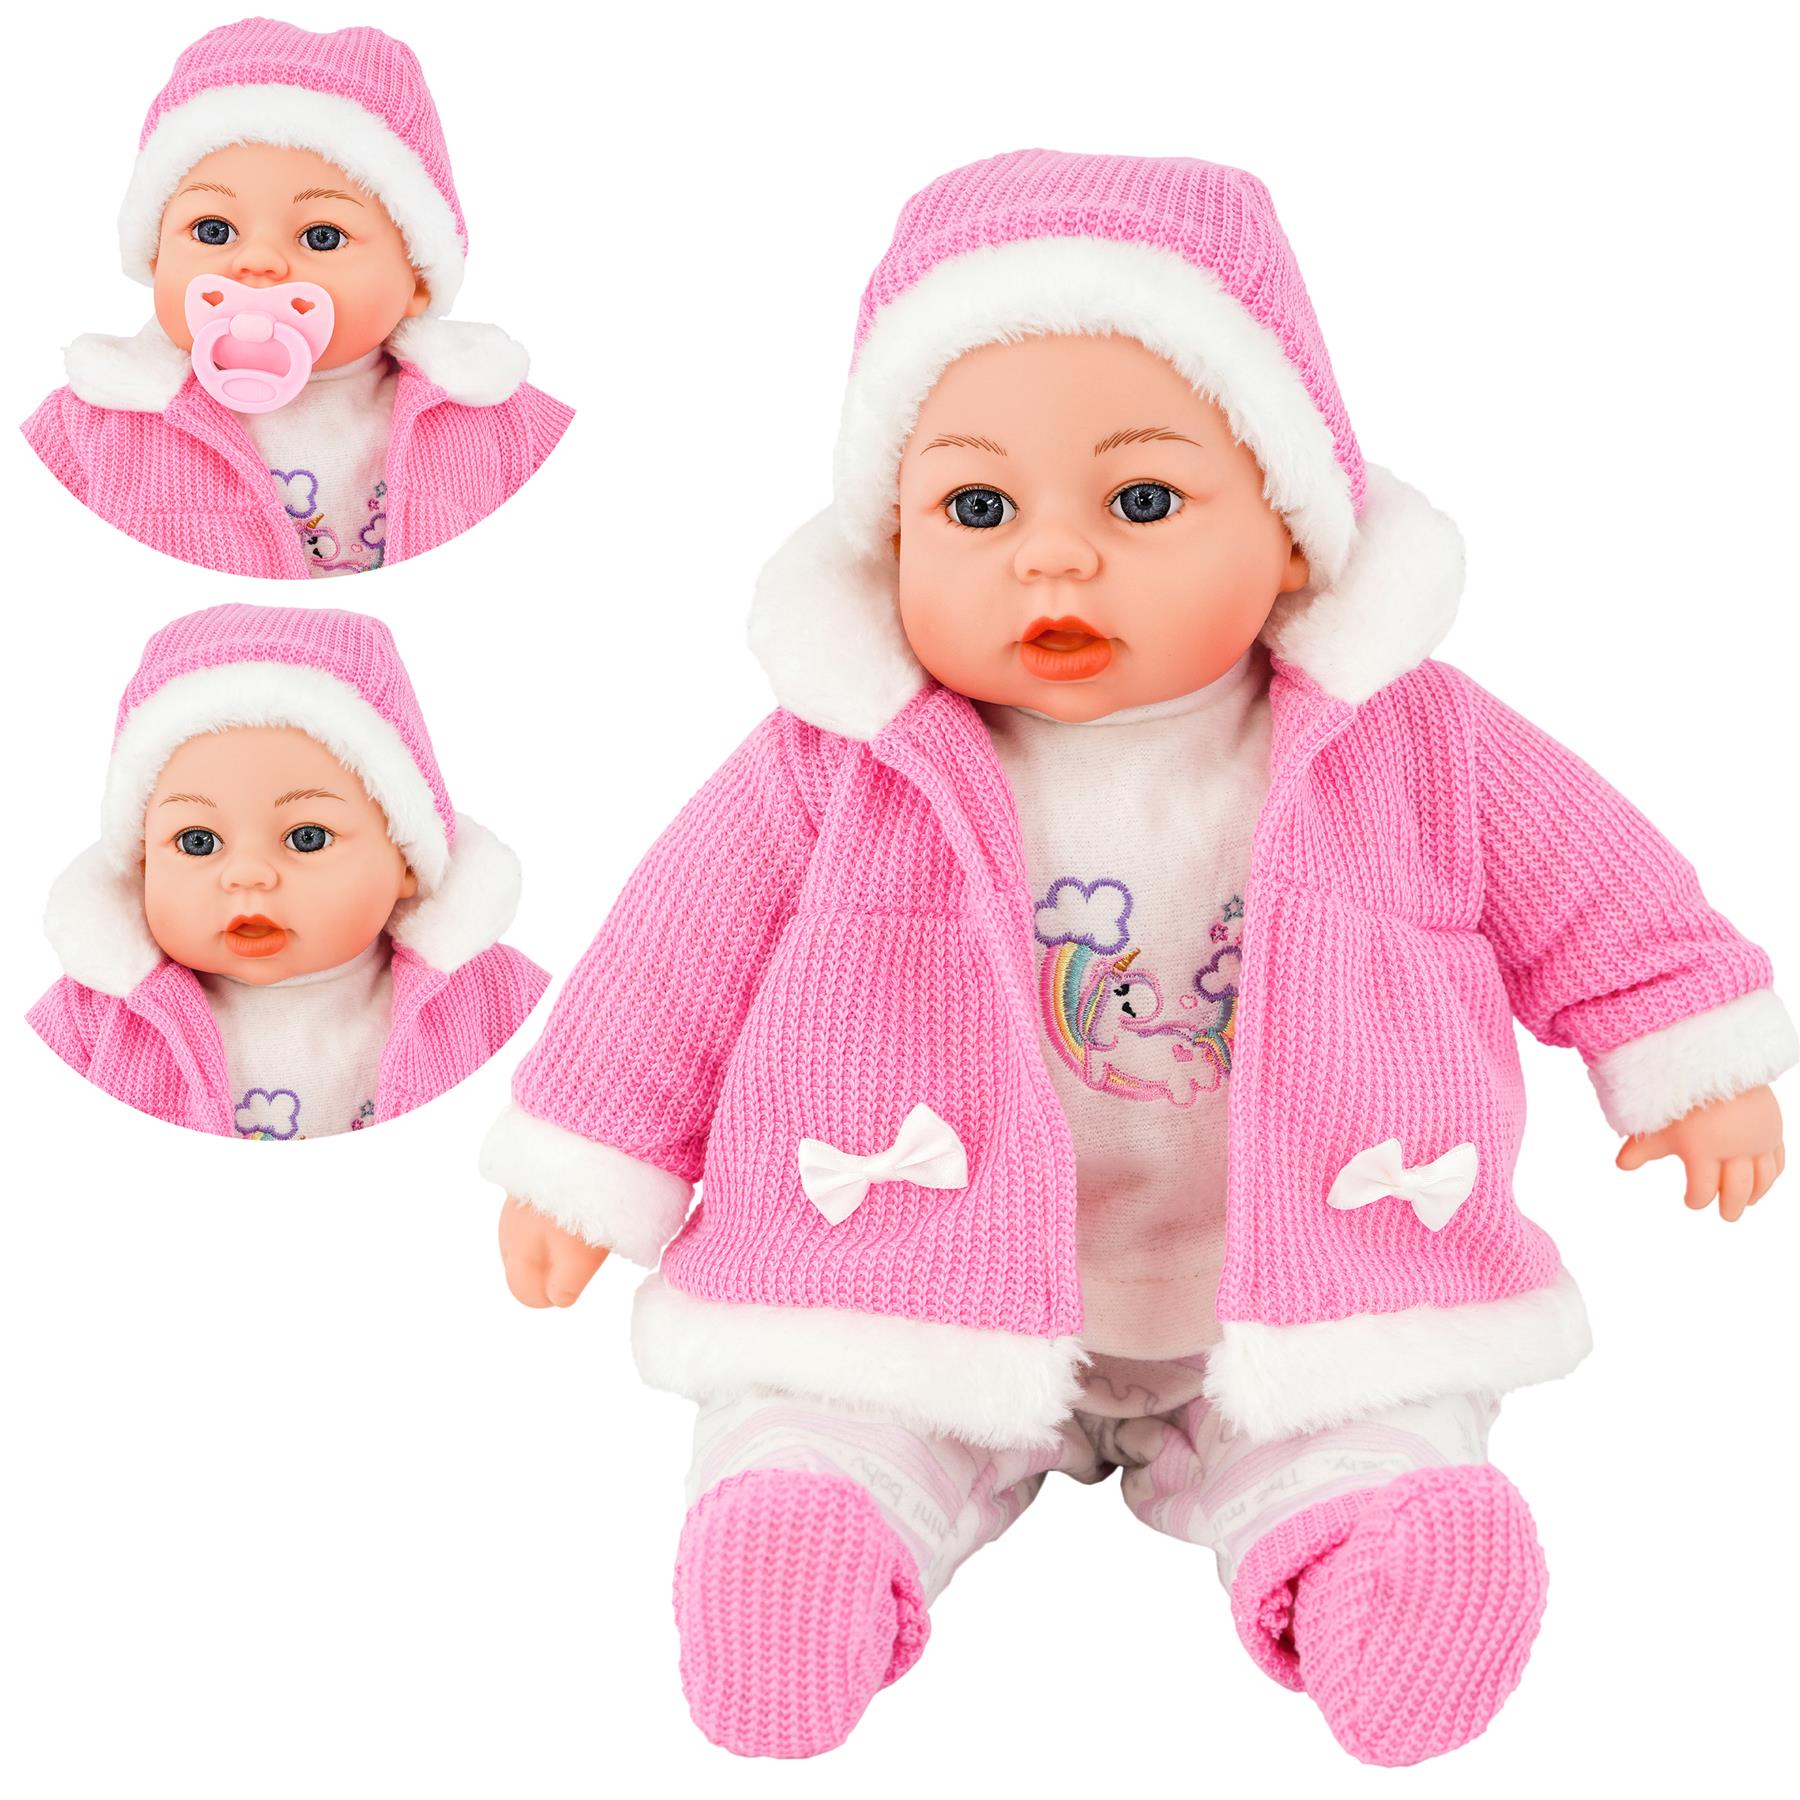 18" Bibi Girl Doll In Pink Coat by BiBi Doll - UKBuyZone